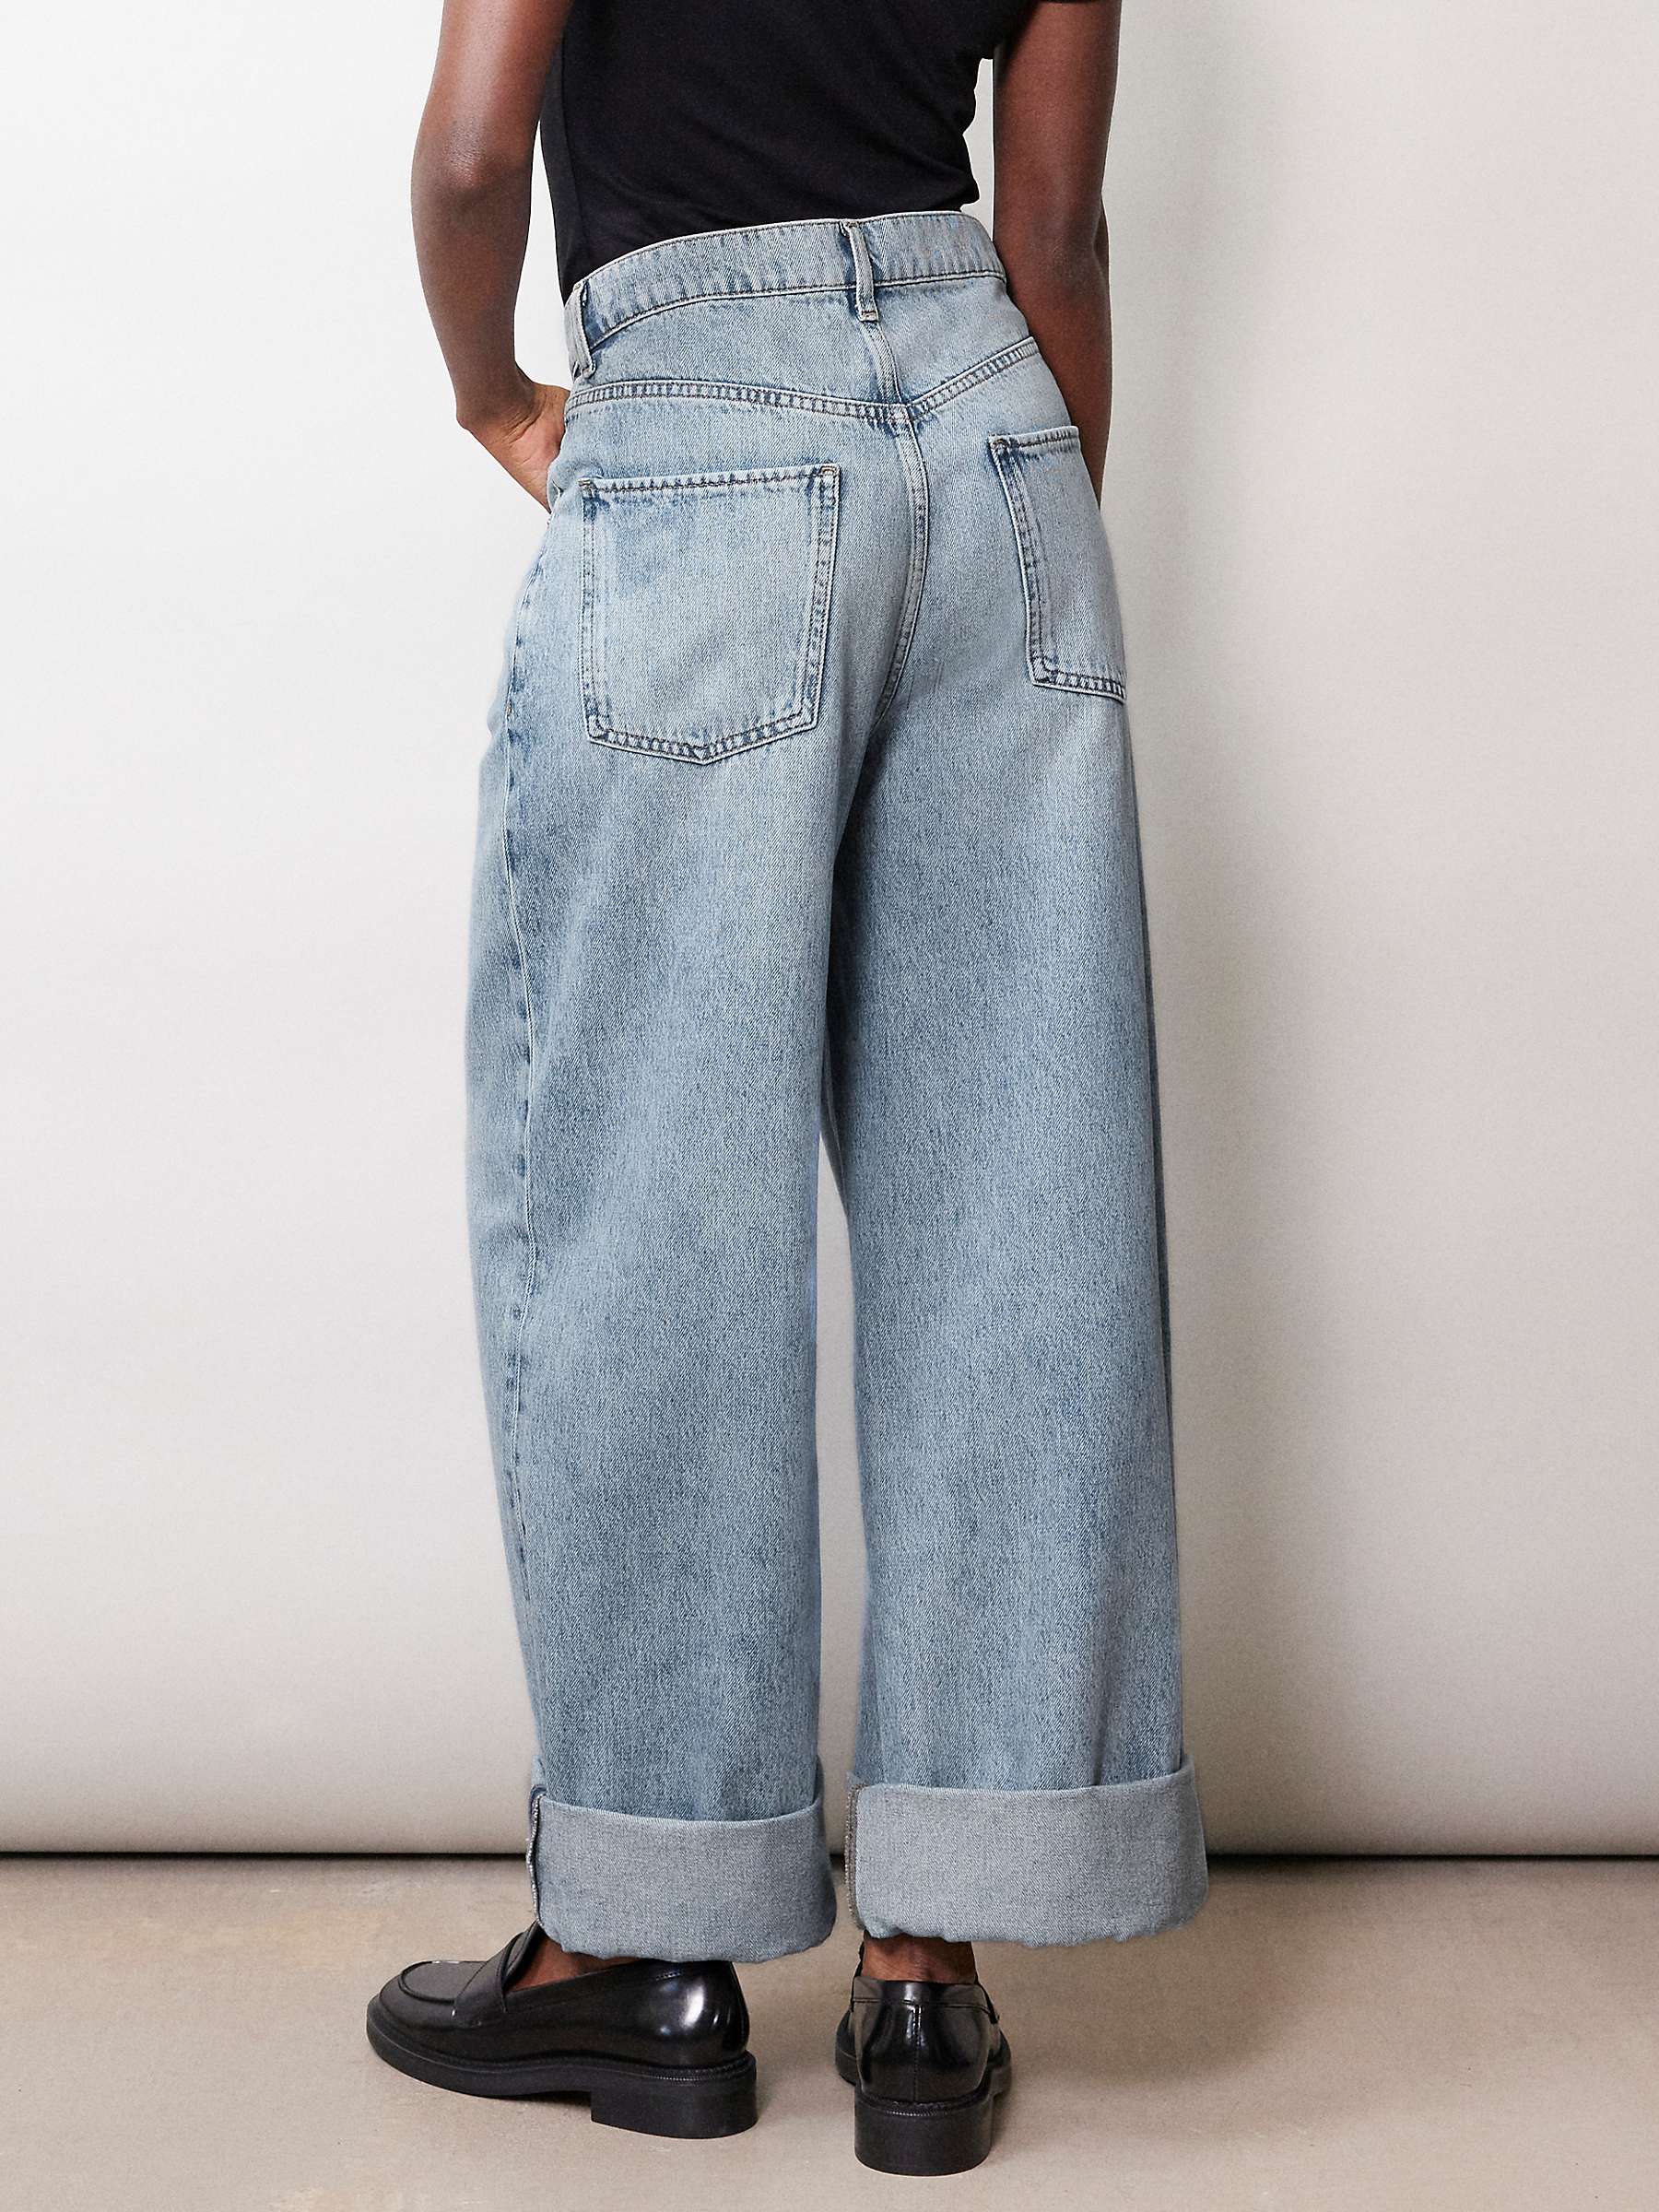 Buy Albaray Turn Up Jeans, Indigo Online at johnlewis.com